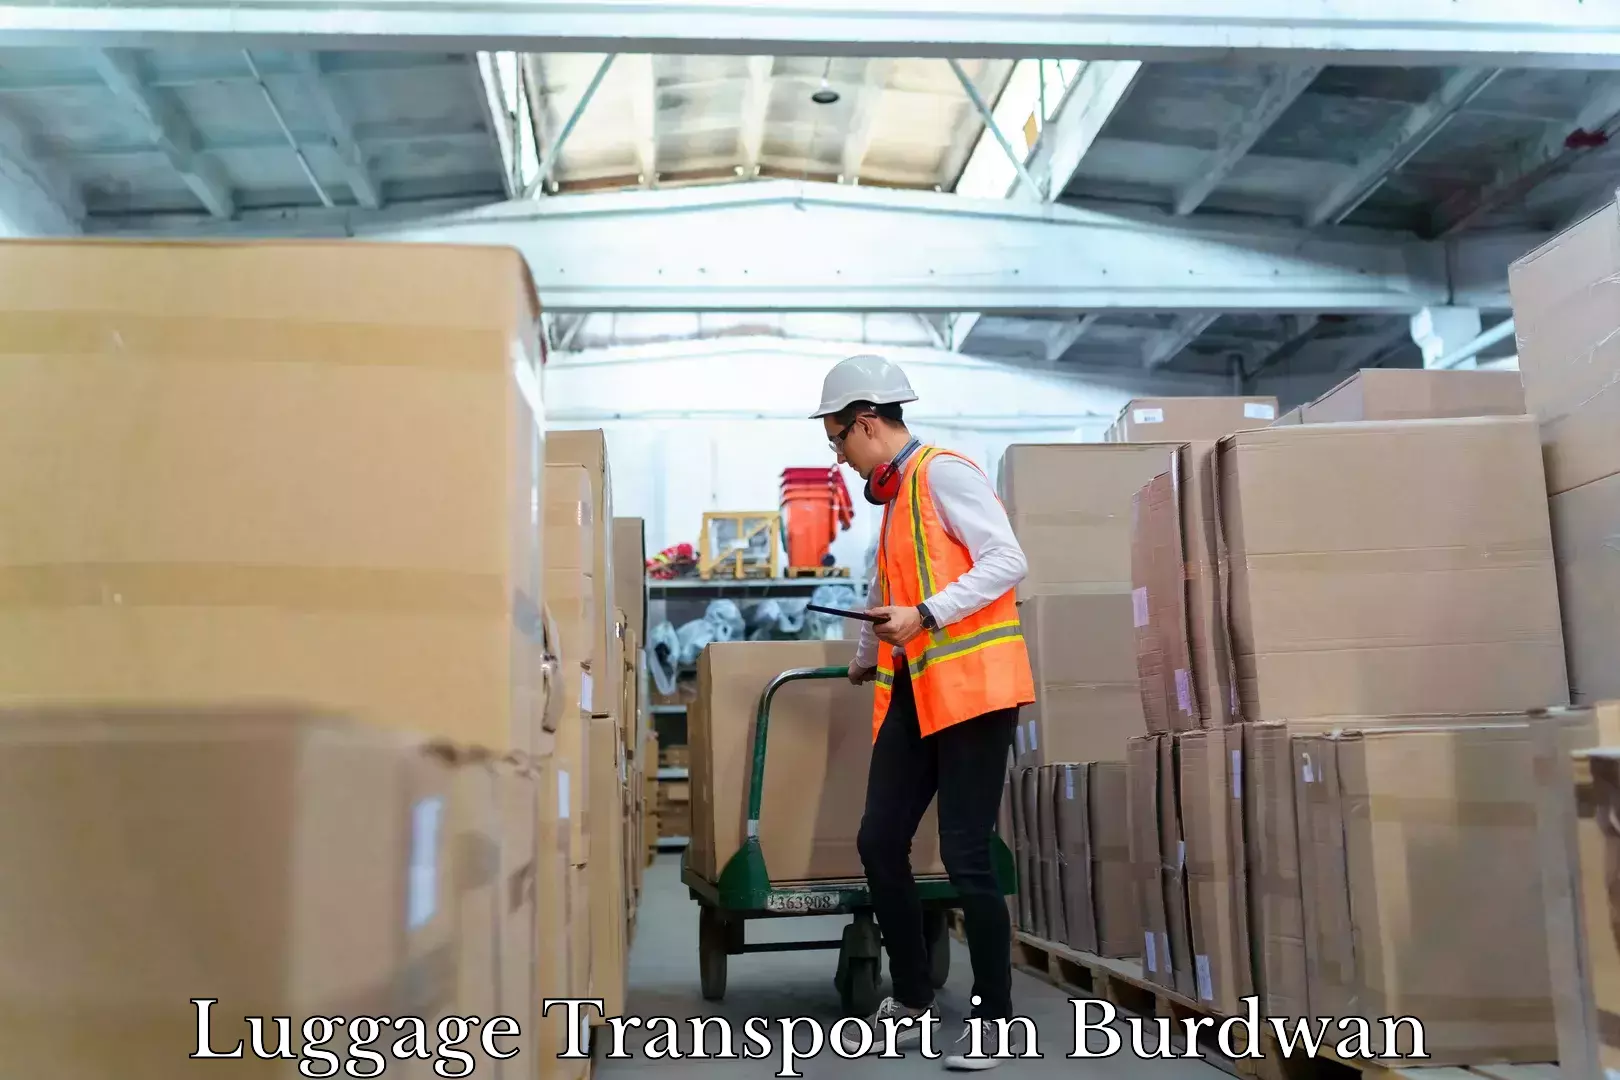 Luggage shipment processing in Burdwan